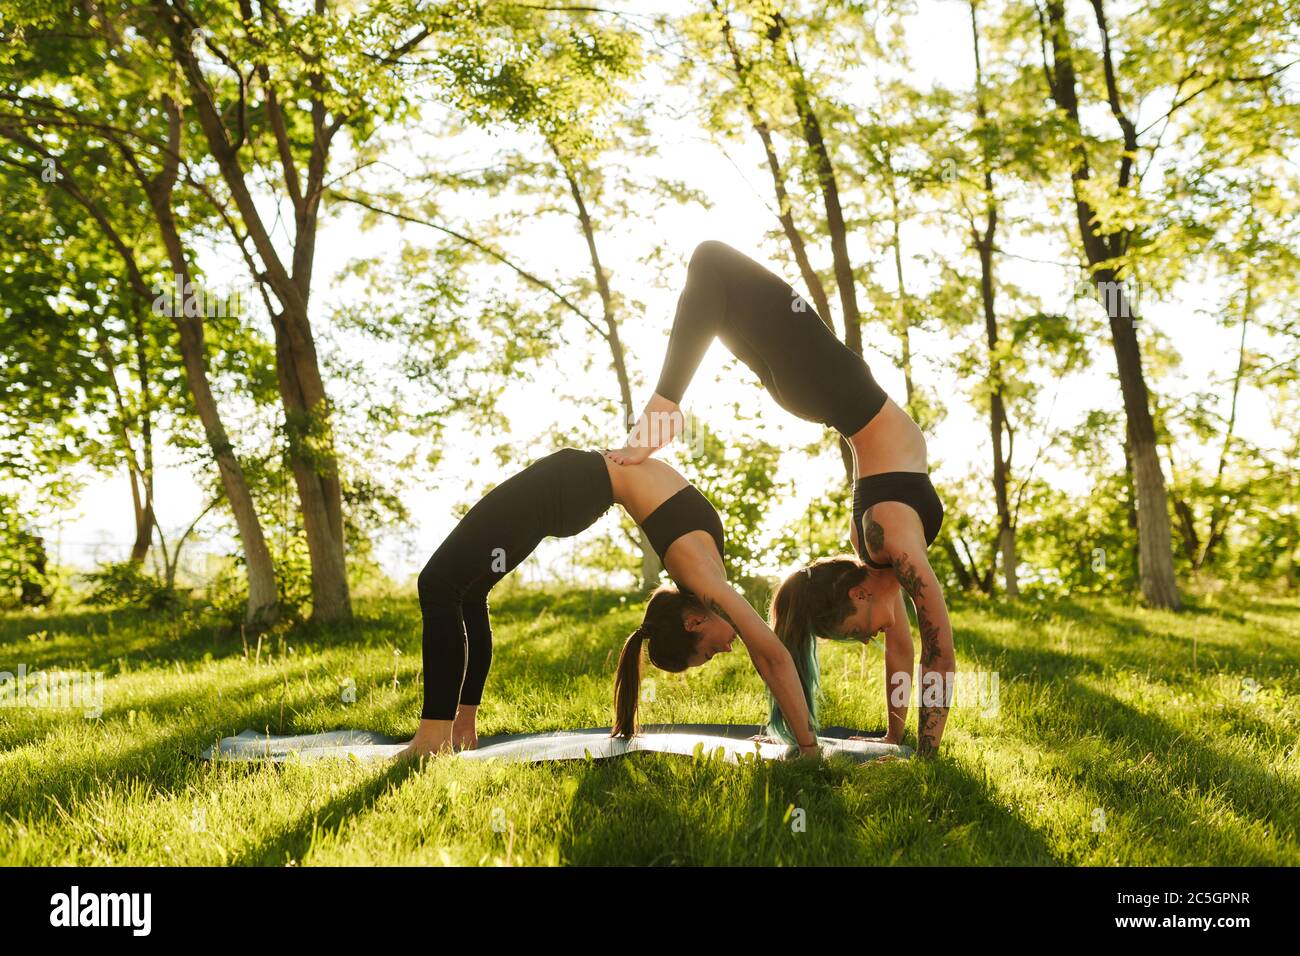 Photo Two Ladies Black Sporty Tops Leggings Training Yoga Poses Stock Photo  by ©Garetsworkshop 201307722